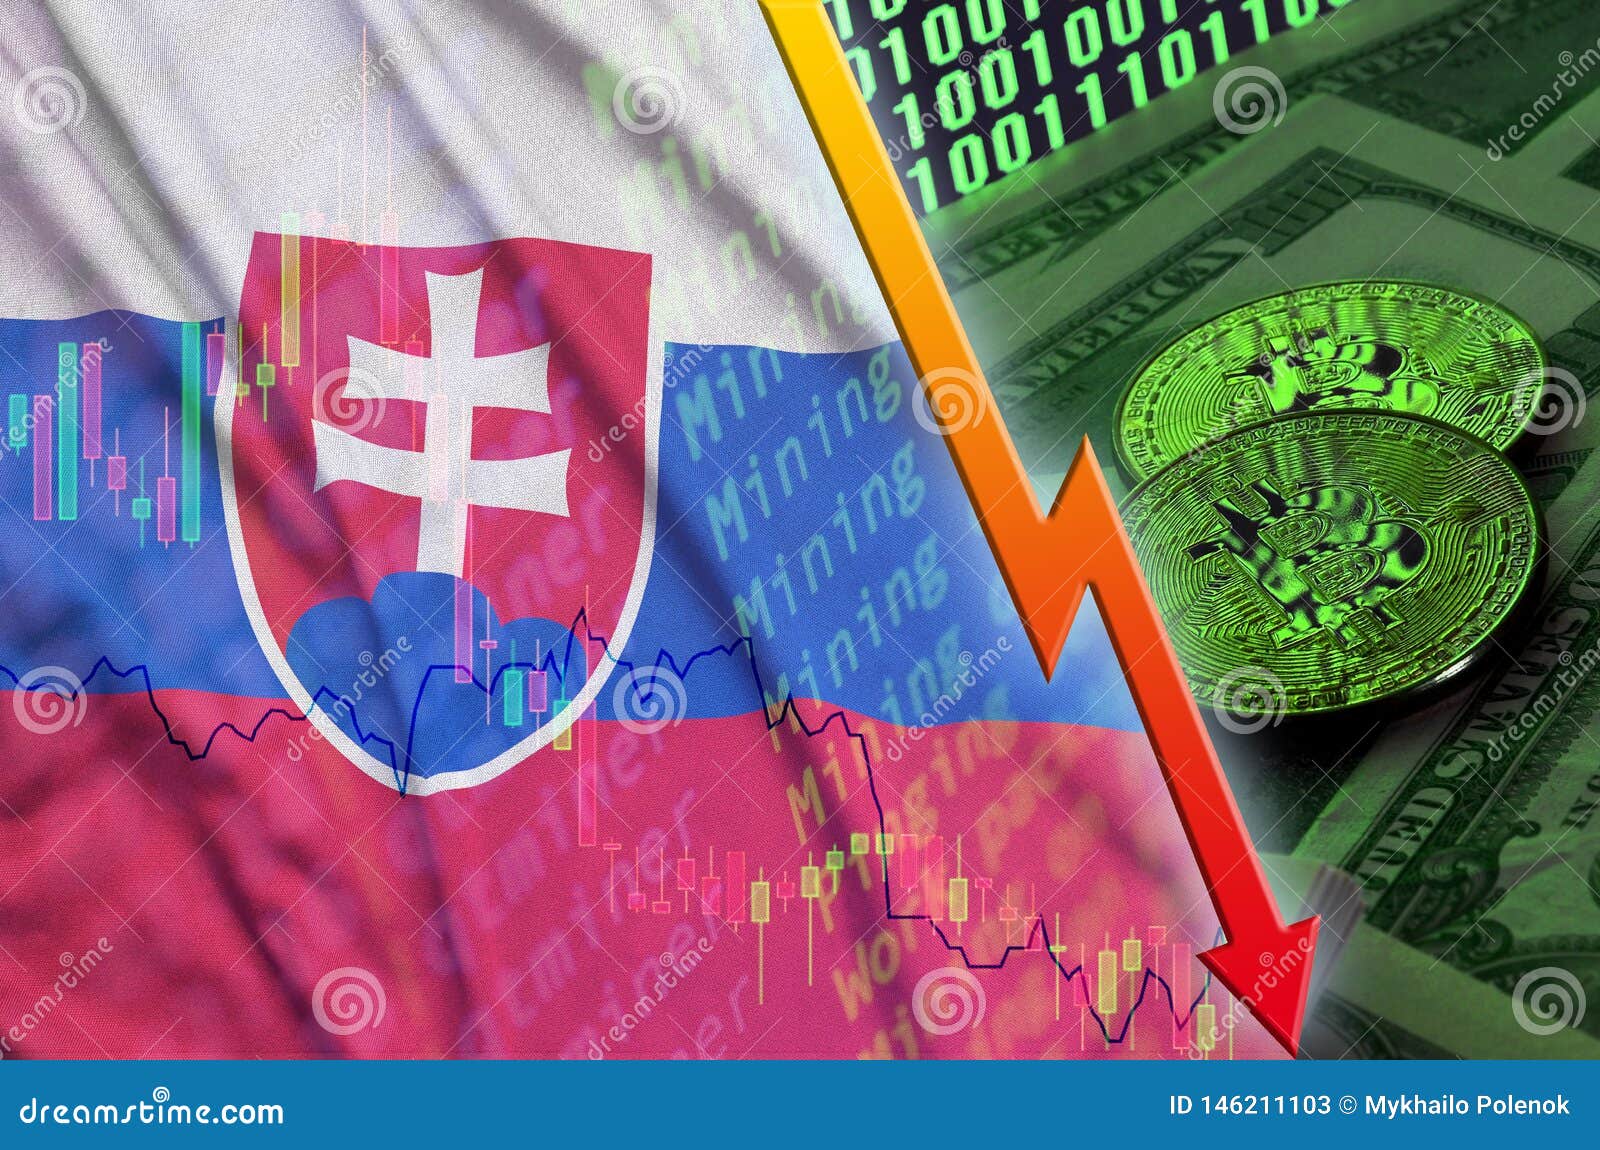 austria slovakia bitcoins